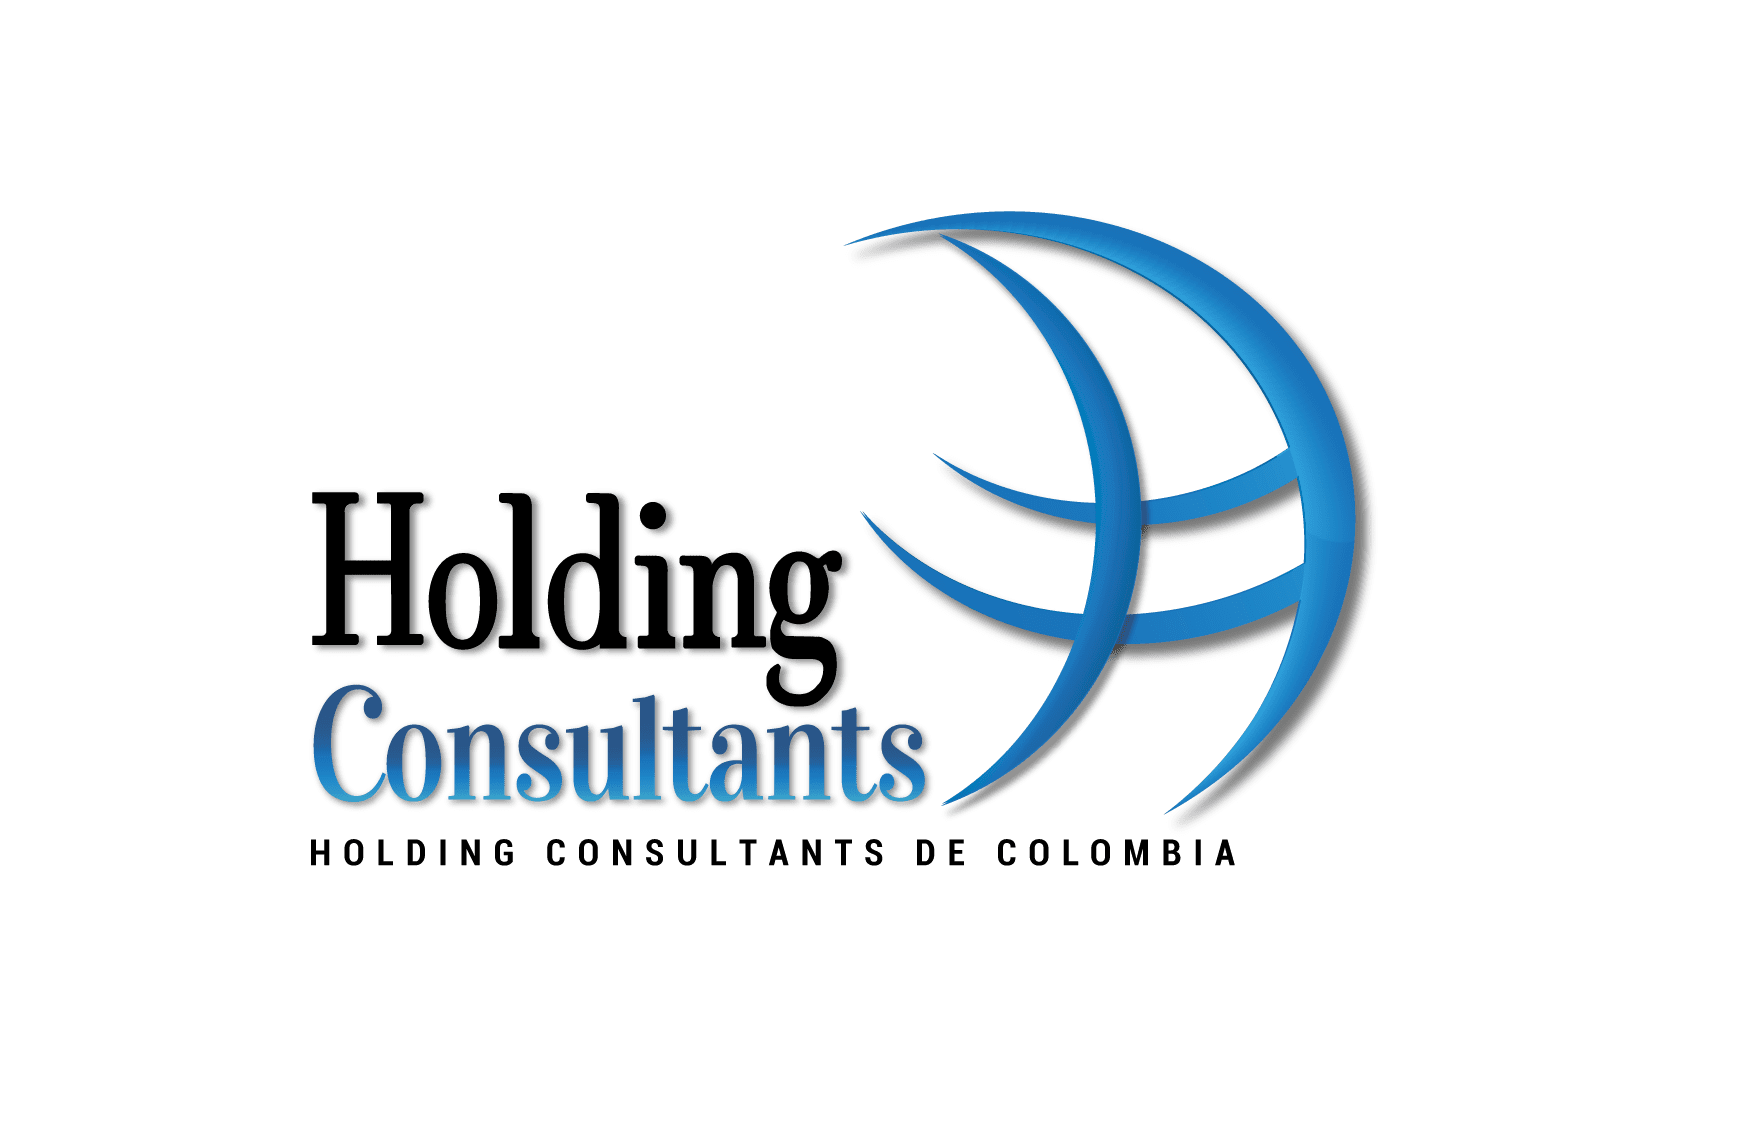 Holding Consultants de Colombia